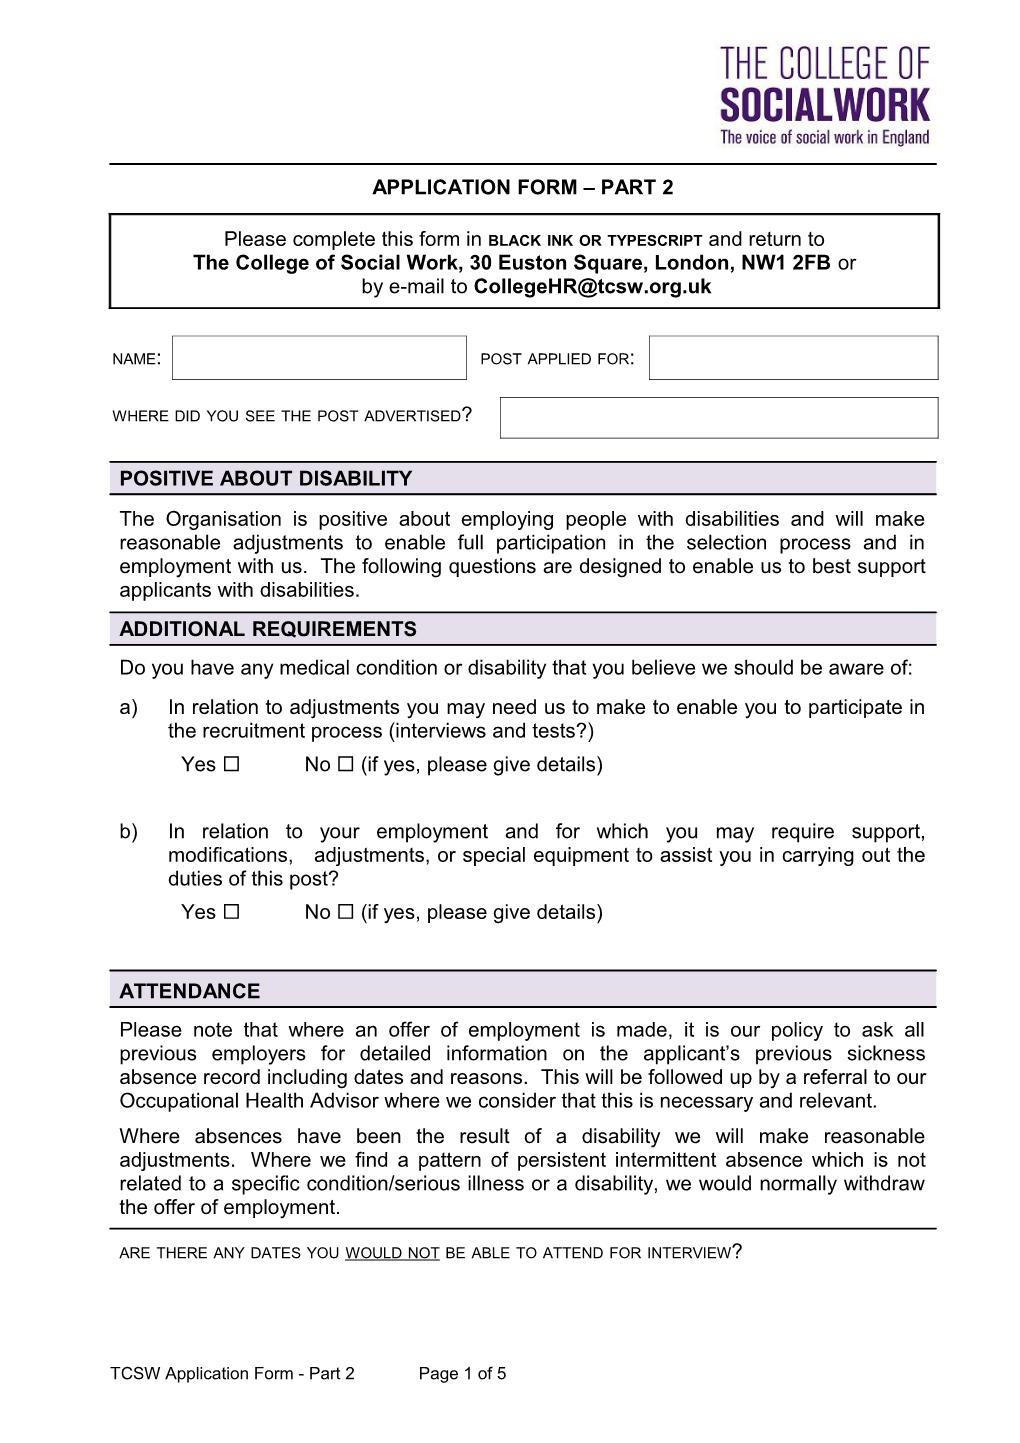 TCSW Application Form Part 2